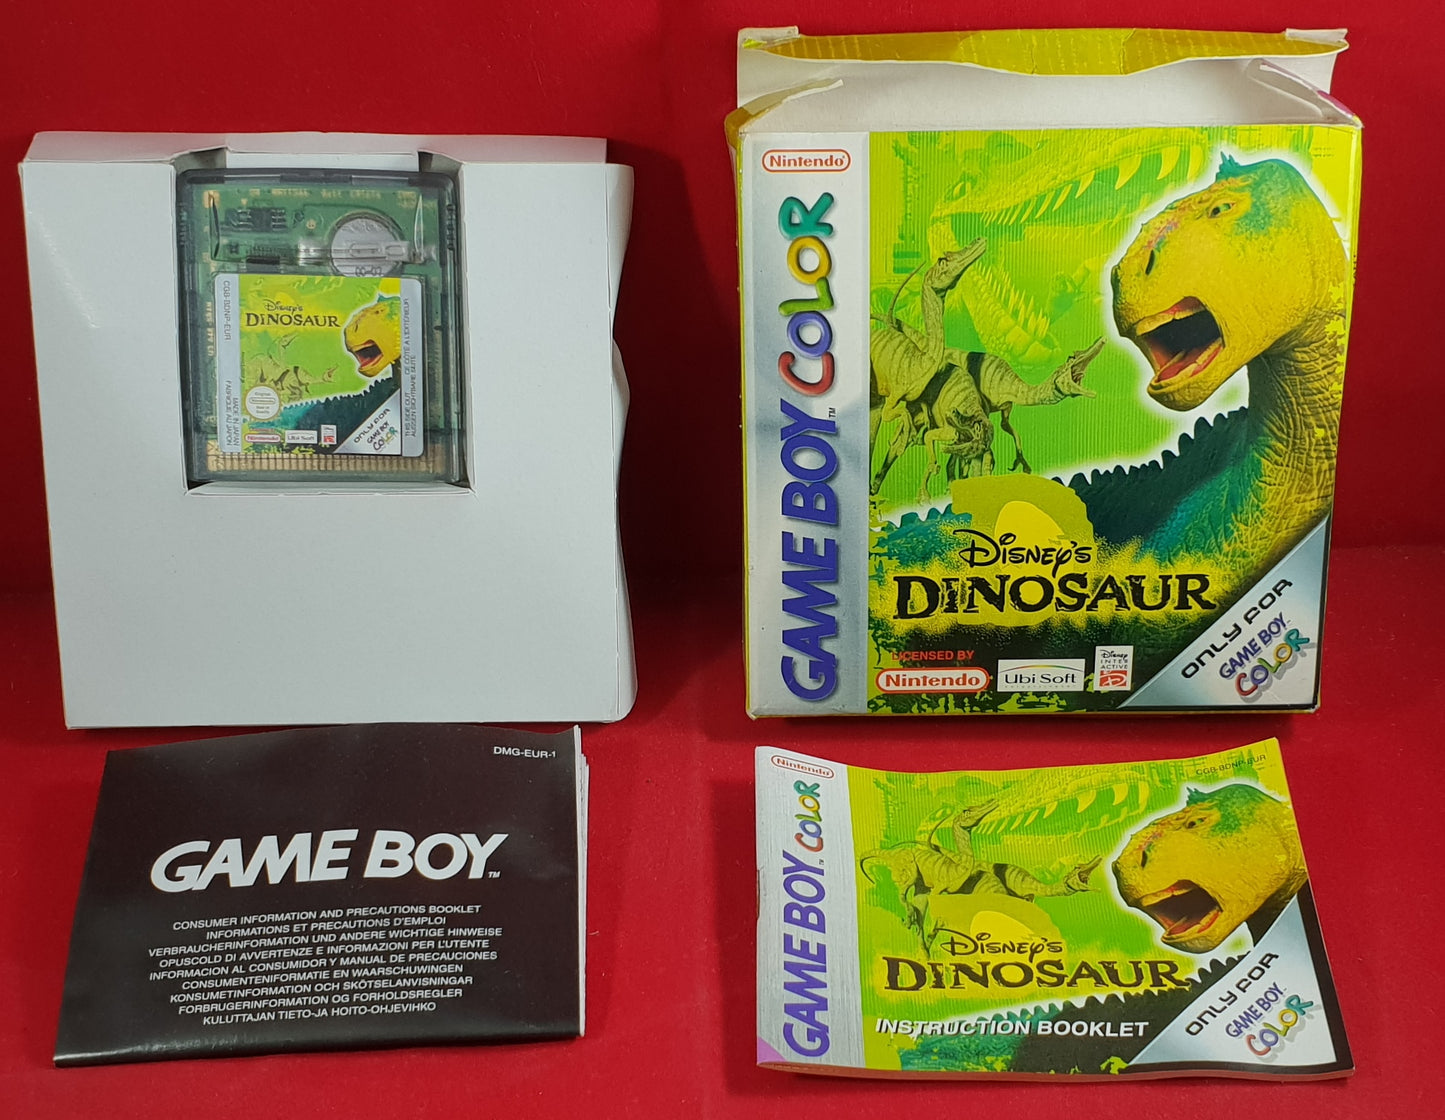 Disney's Dinosaur Game Boy Color Game